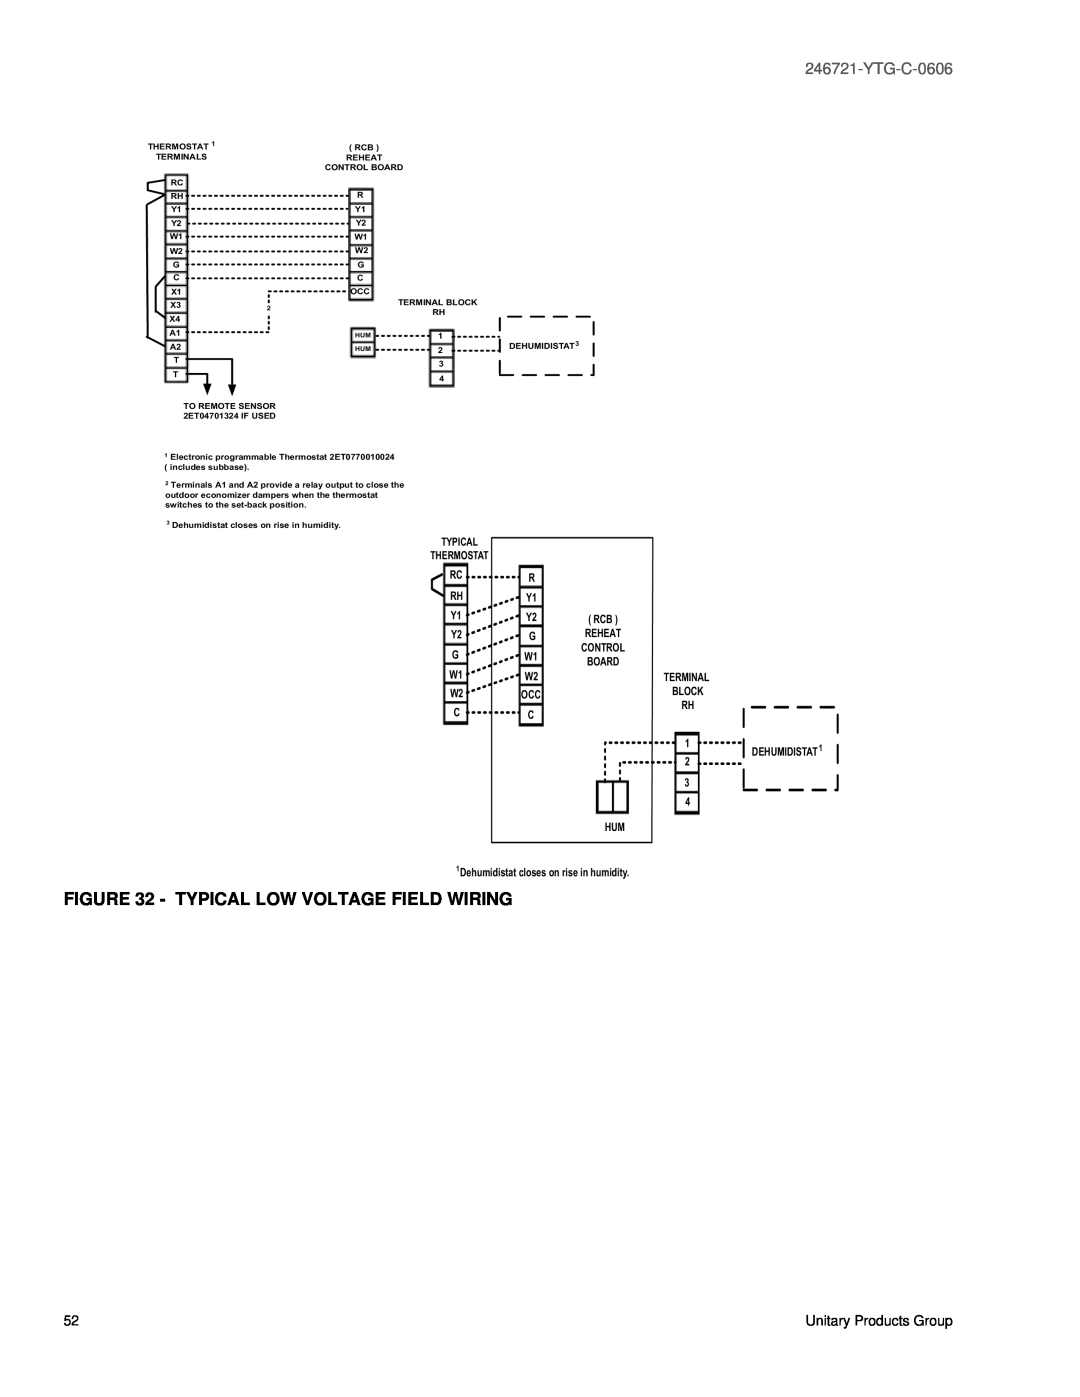 York DR090, DR120, DR150 manual Typical Low Voltage Field Wiring, YTG-C-0606, TYPICAL THERMOSTAT RC RH Y1 Y2 G W1 W2 C 